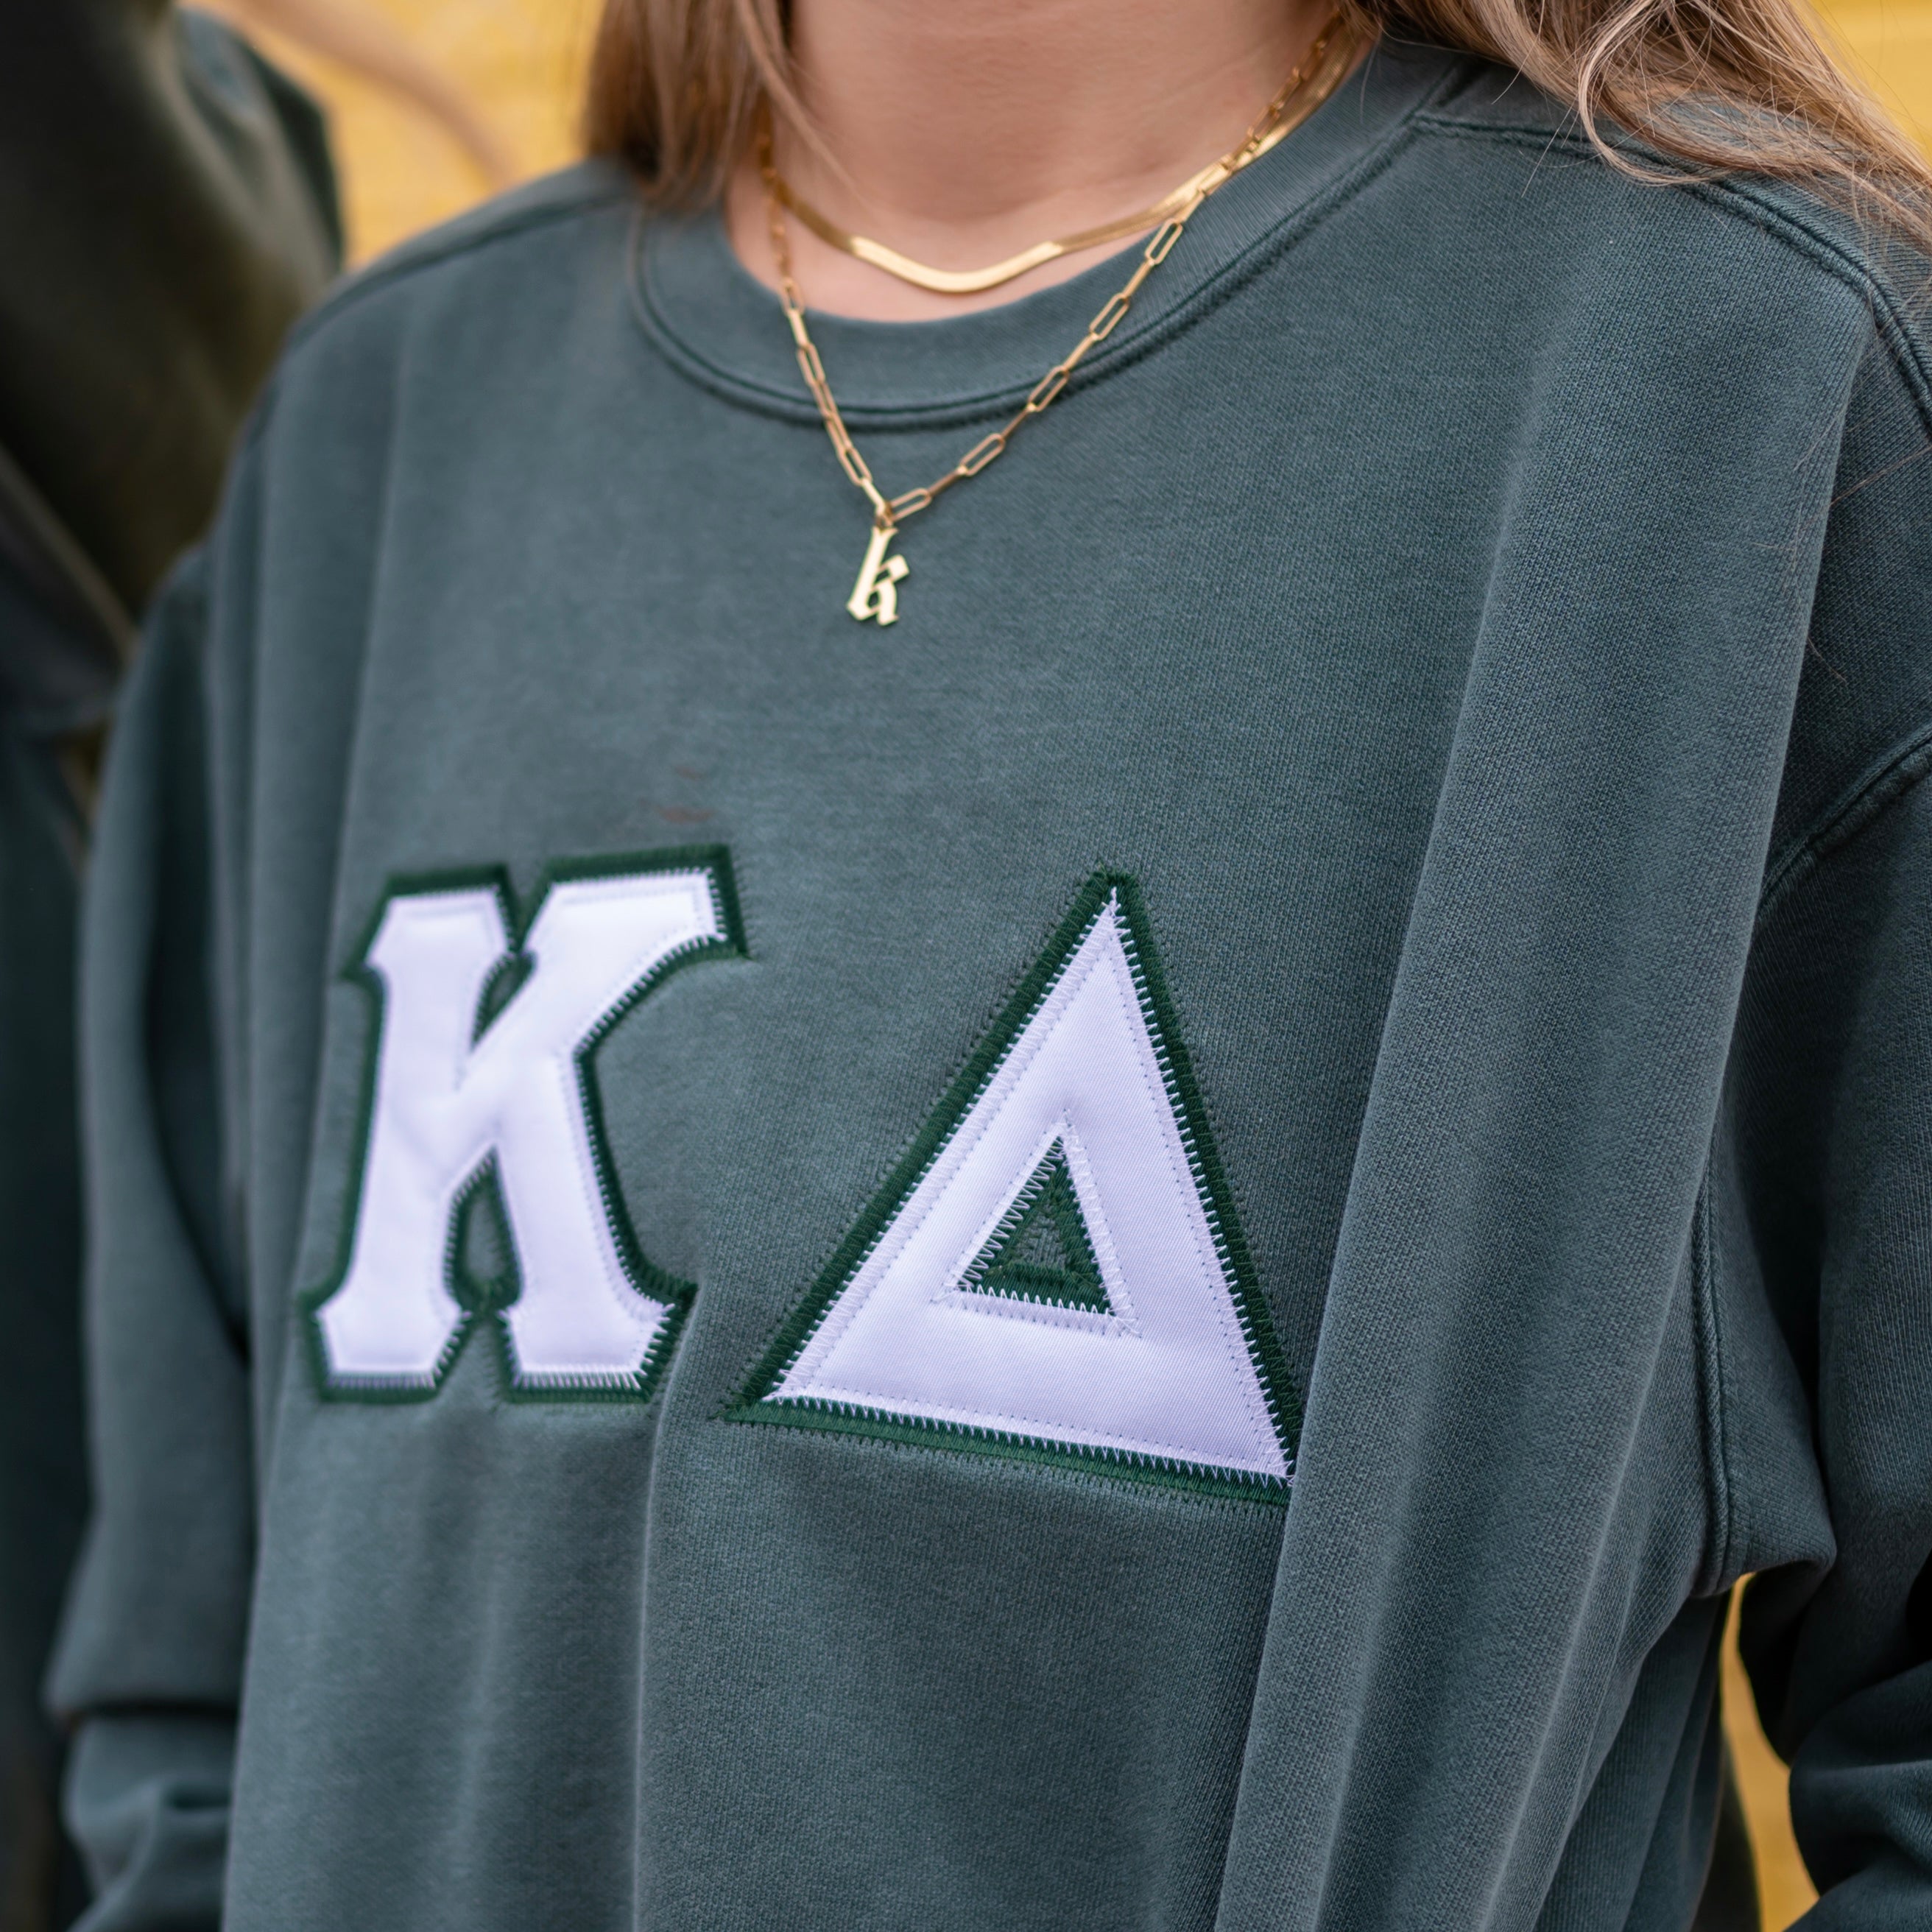 Custom Stitched Kappa Delta Sorority Greek Letter Crewneck Sweatshirt